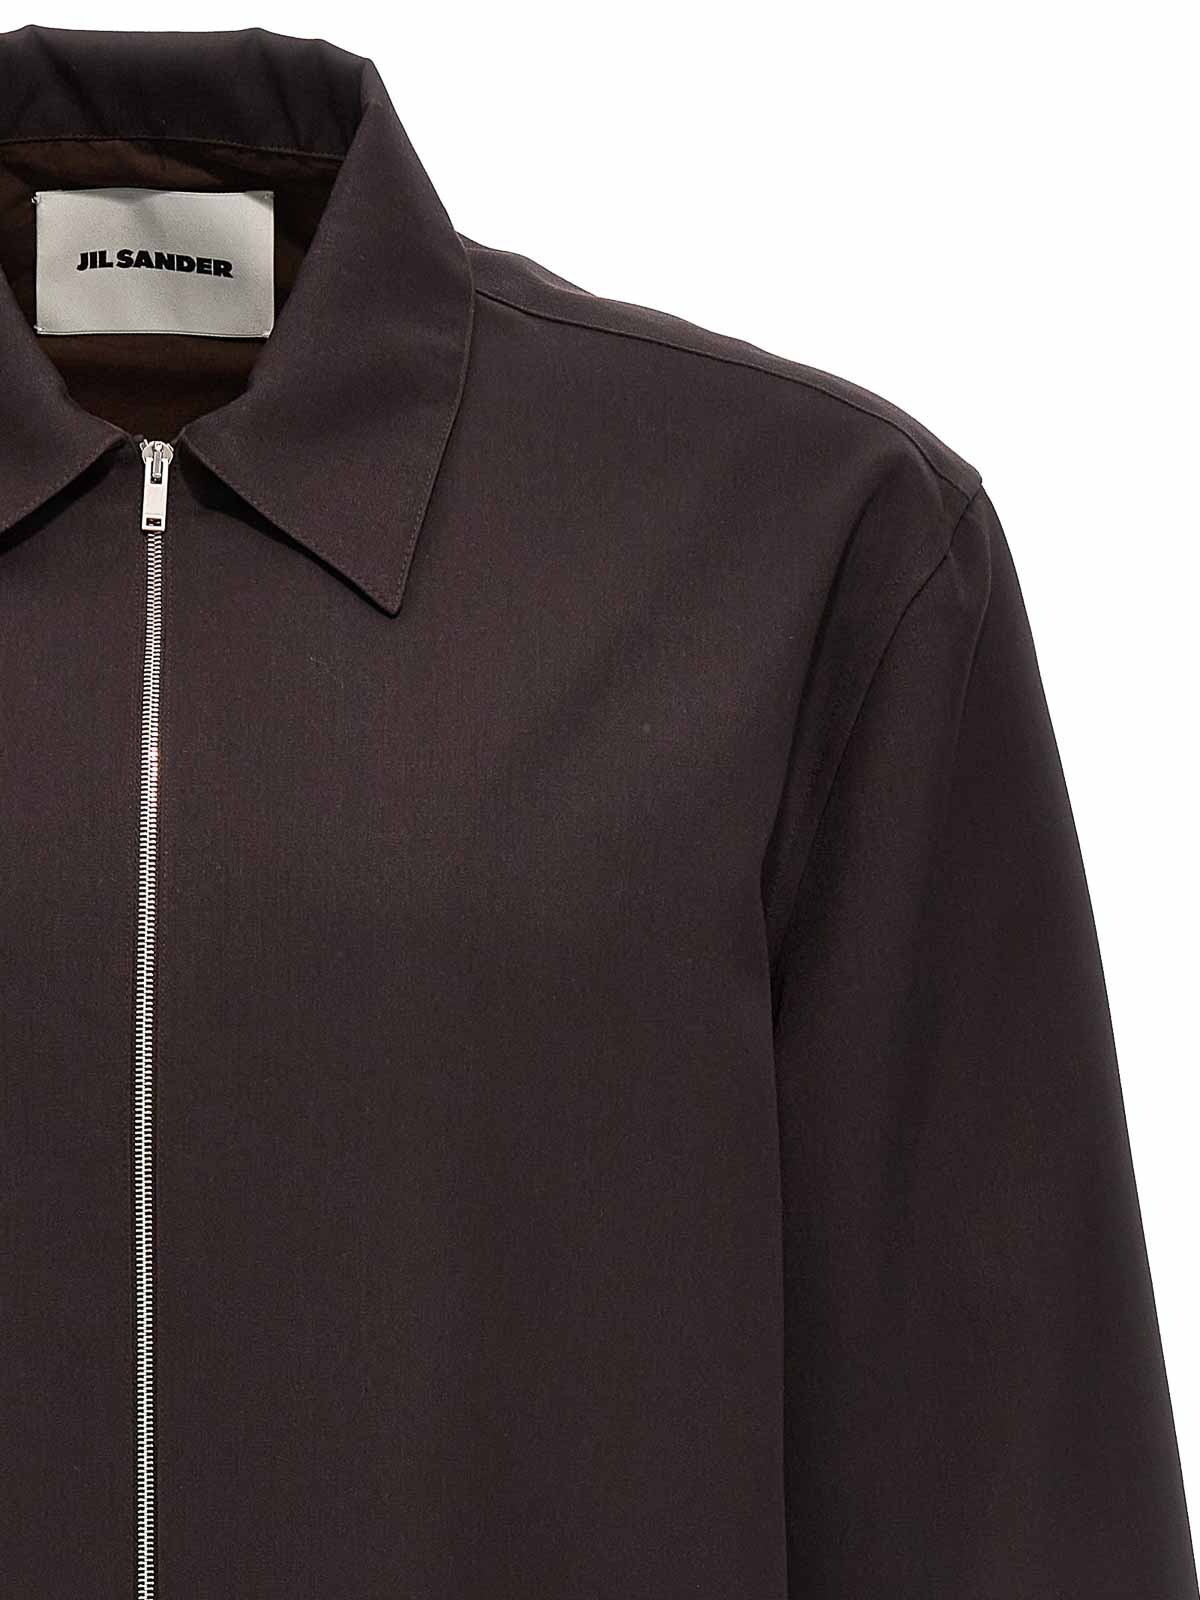 Jil Sander wool gabardine shirt - Black